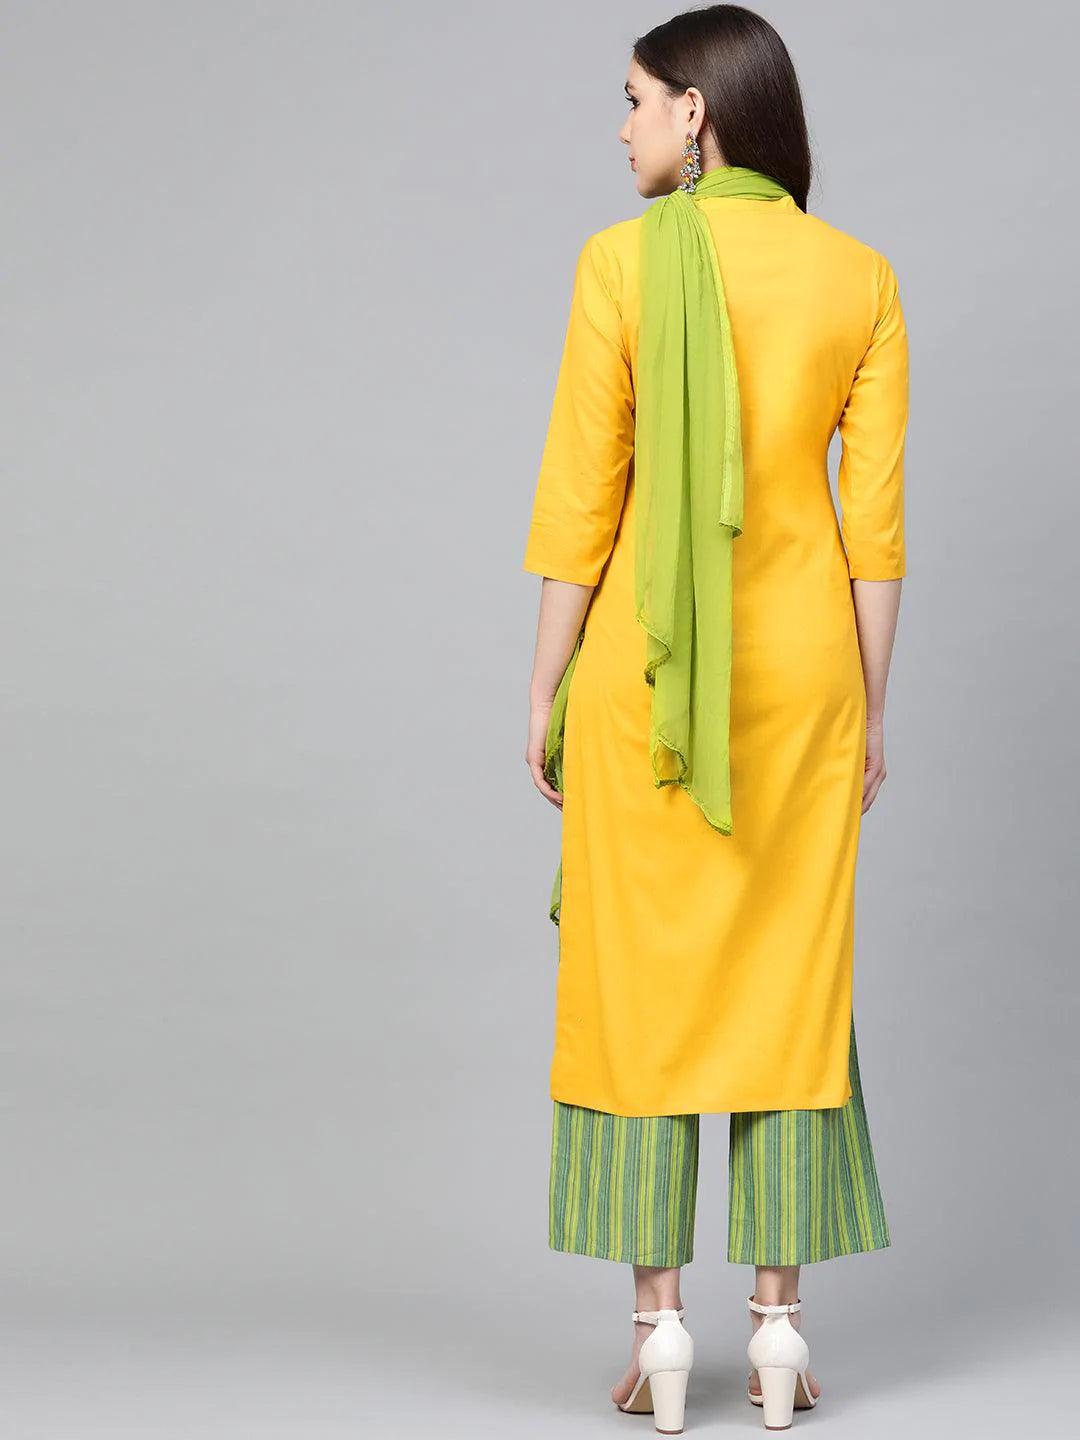 Yellow Embroidered Cotton Suit Set - ShopLibas